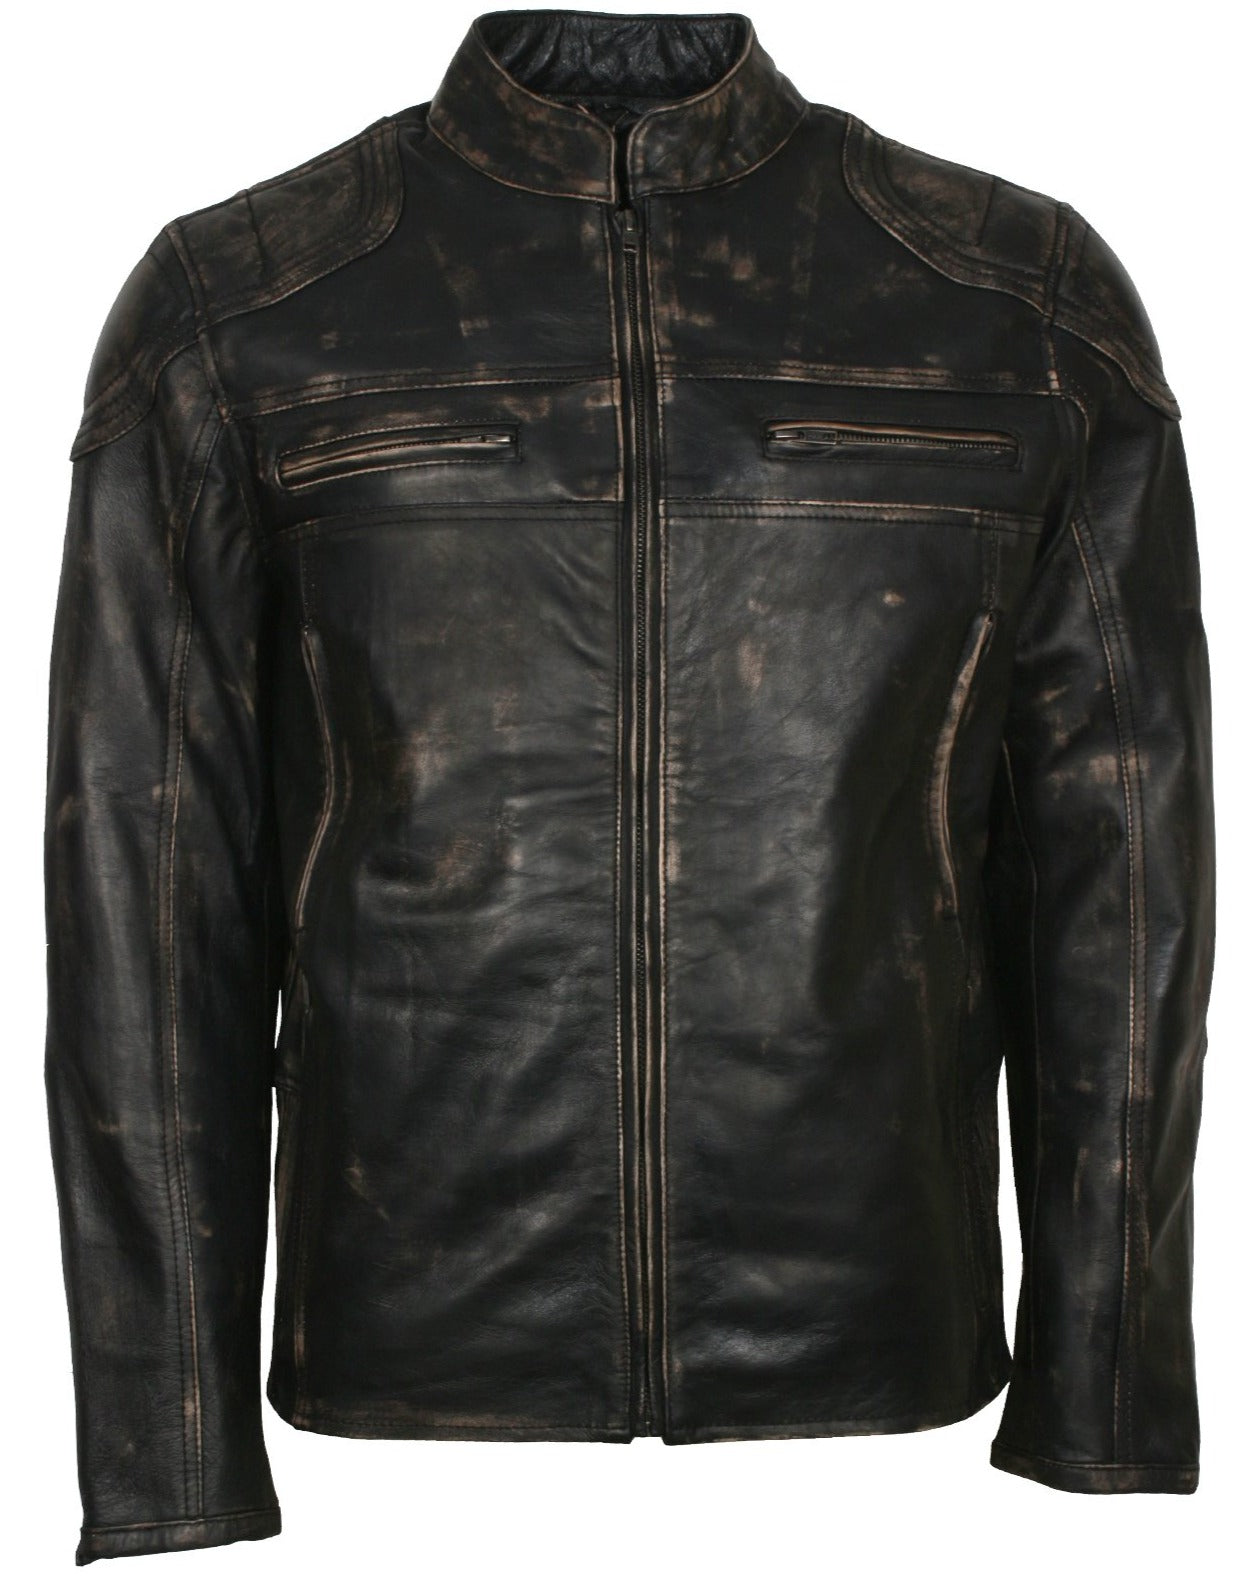 Distressed Leather Jacket Men in Black